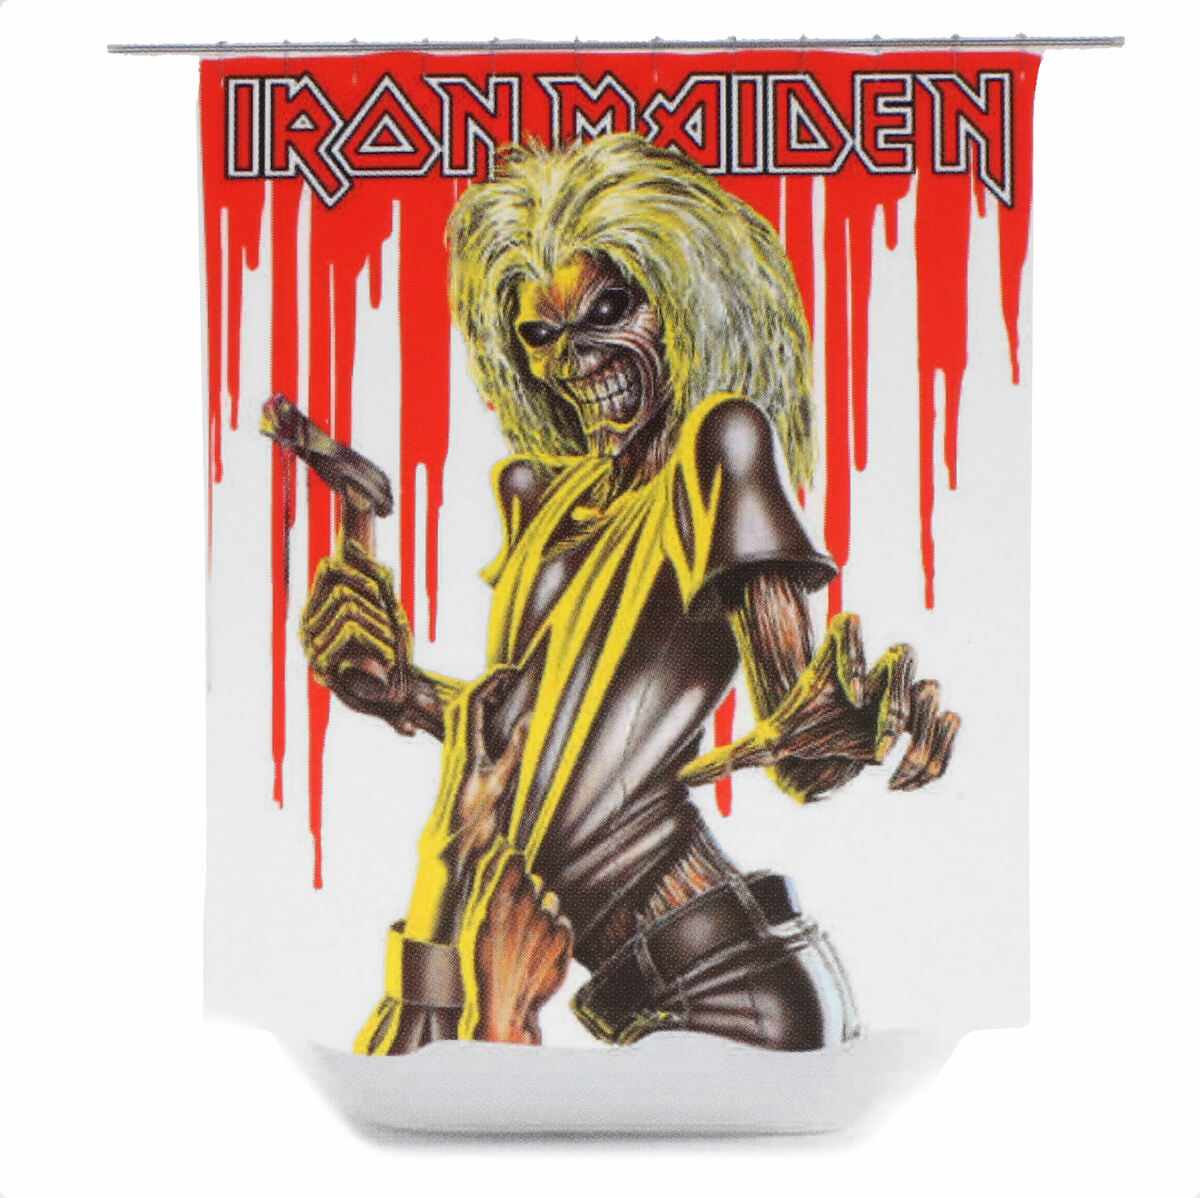 závěs do sprchy Iron Maiden - Killers